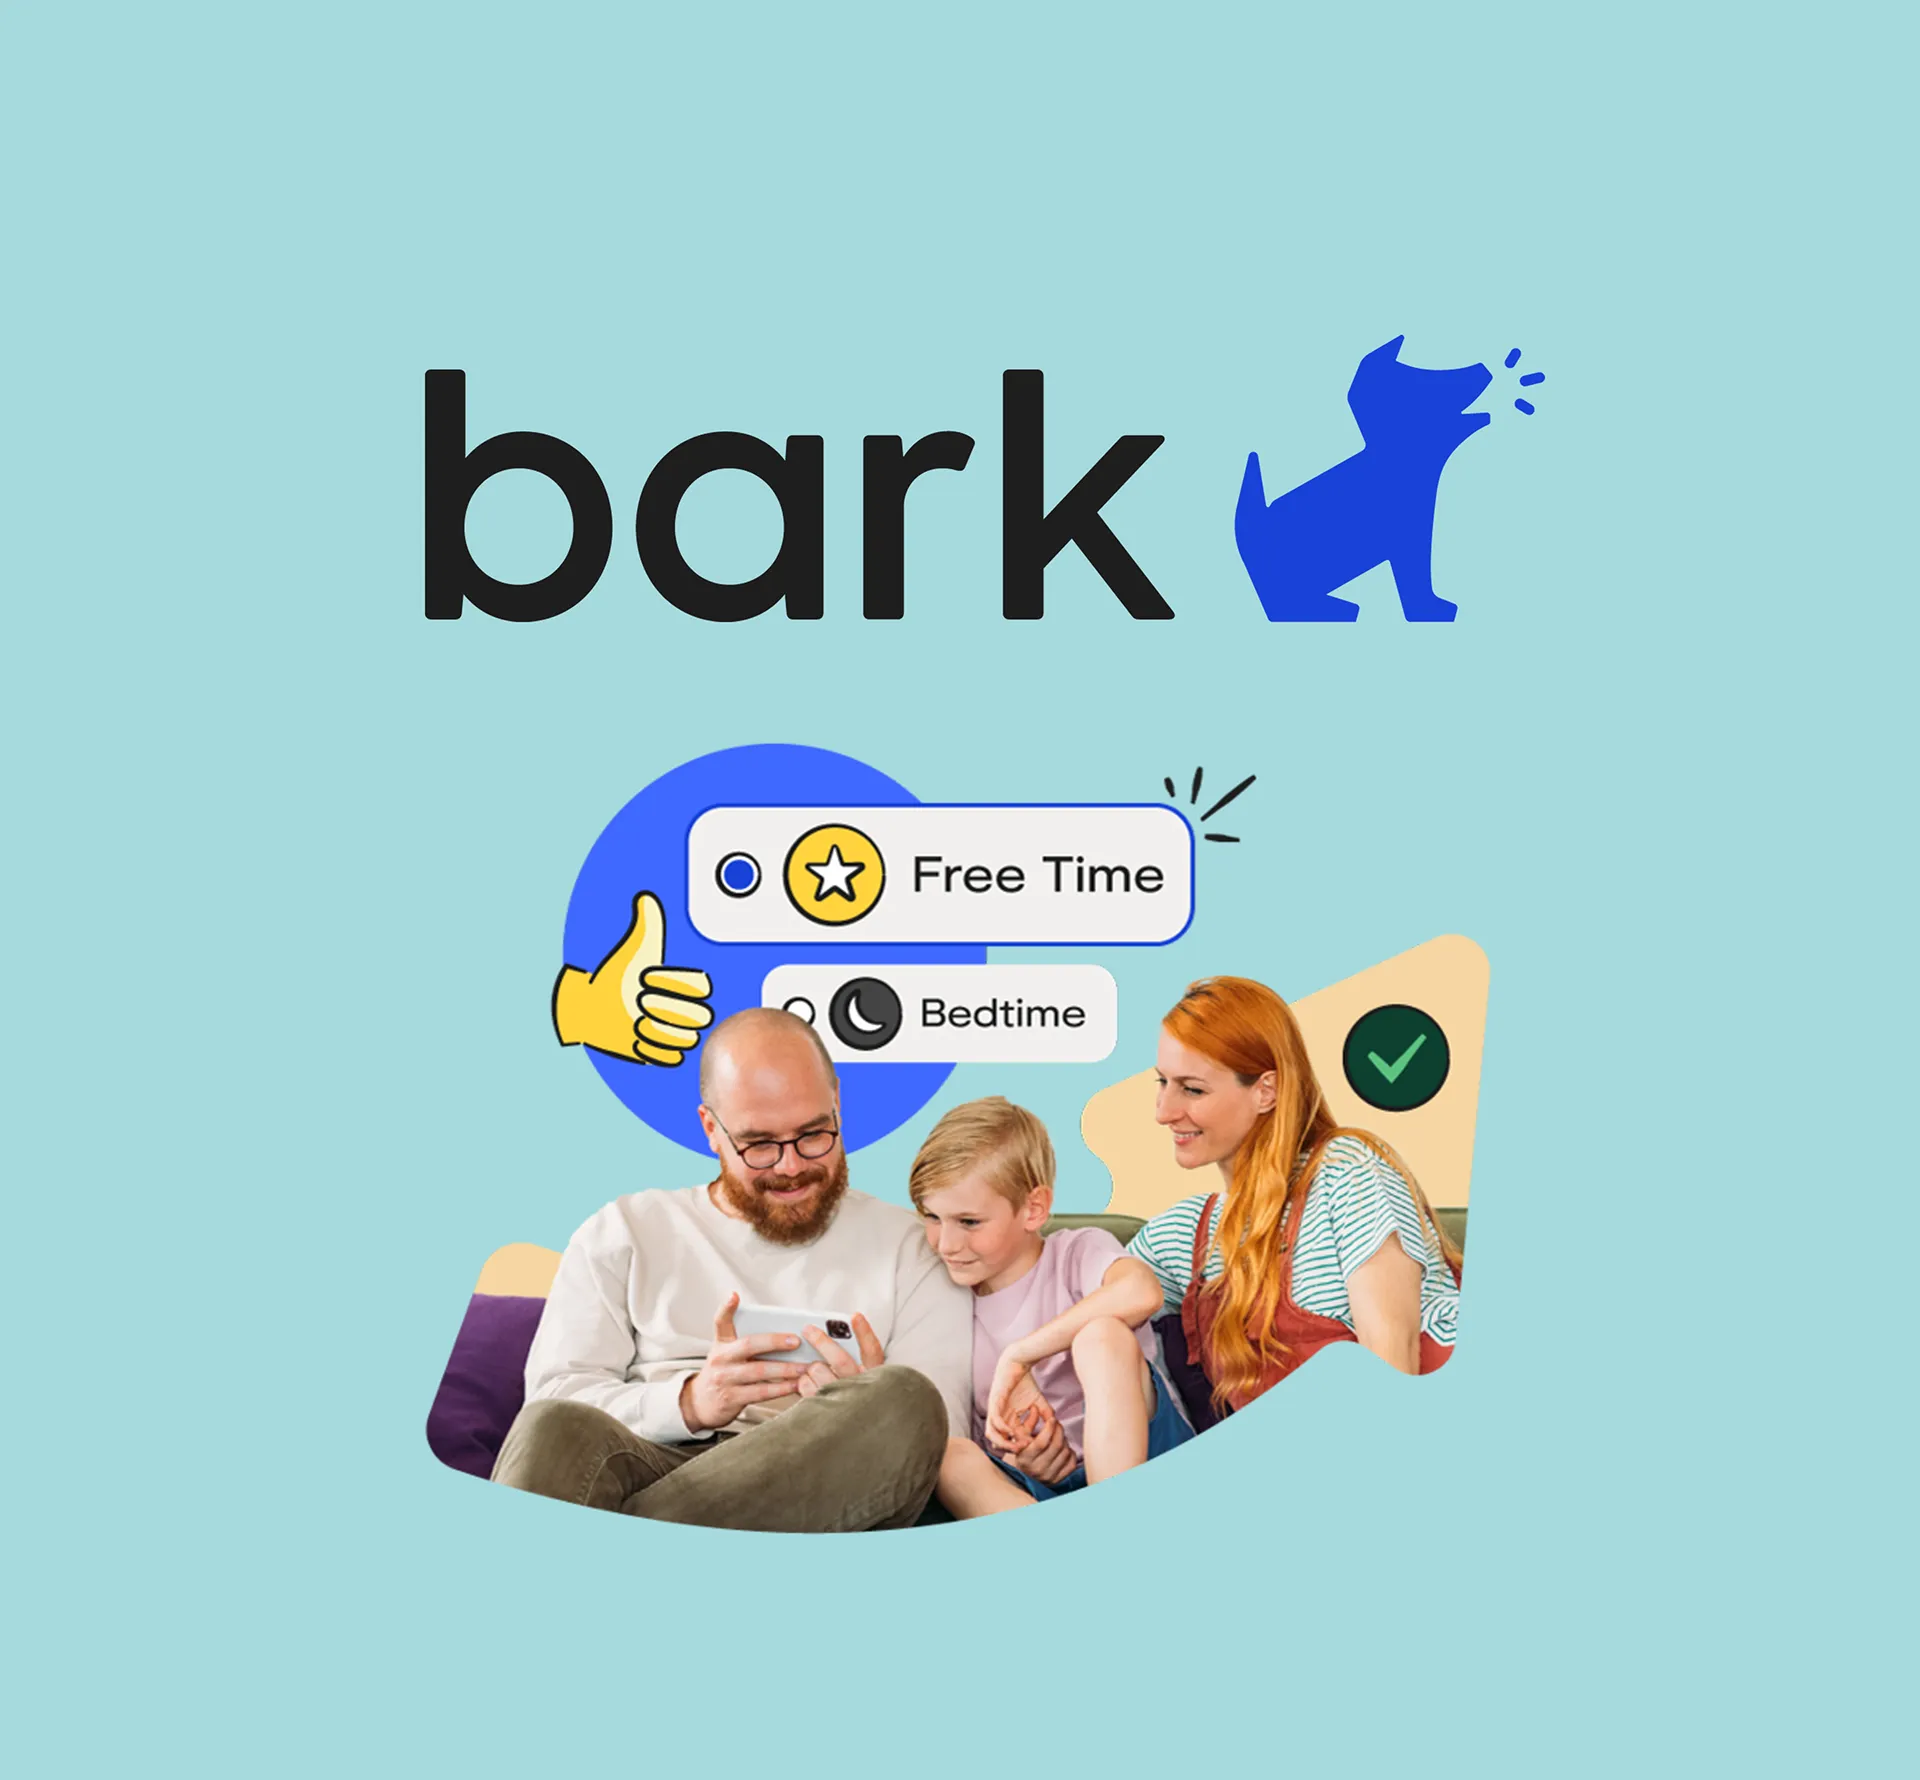 bark branding - an online safety ecosystem